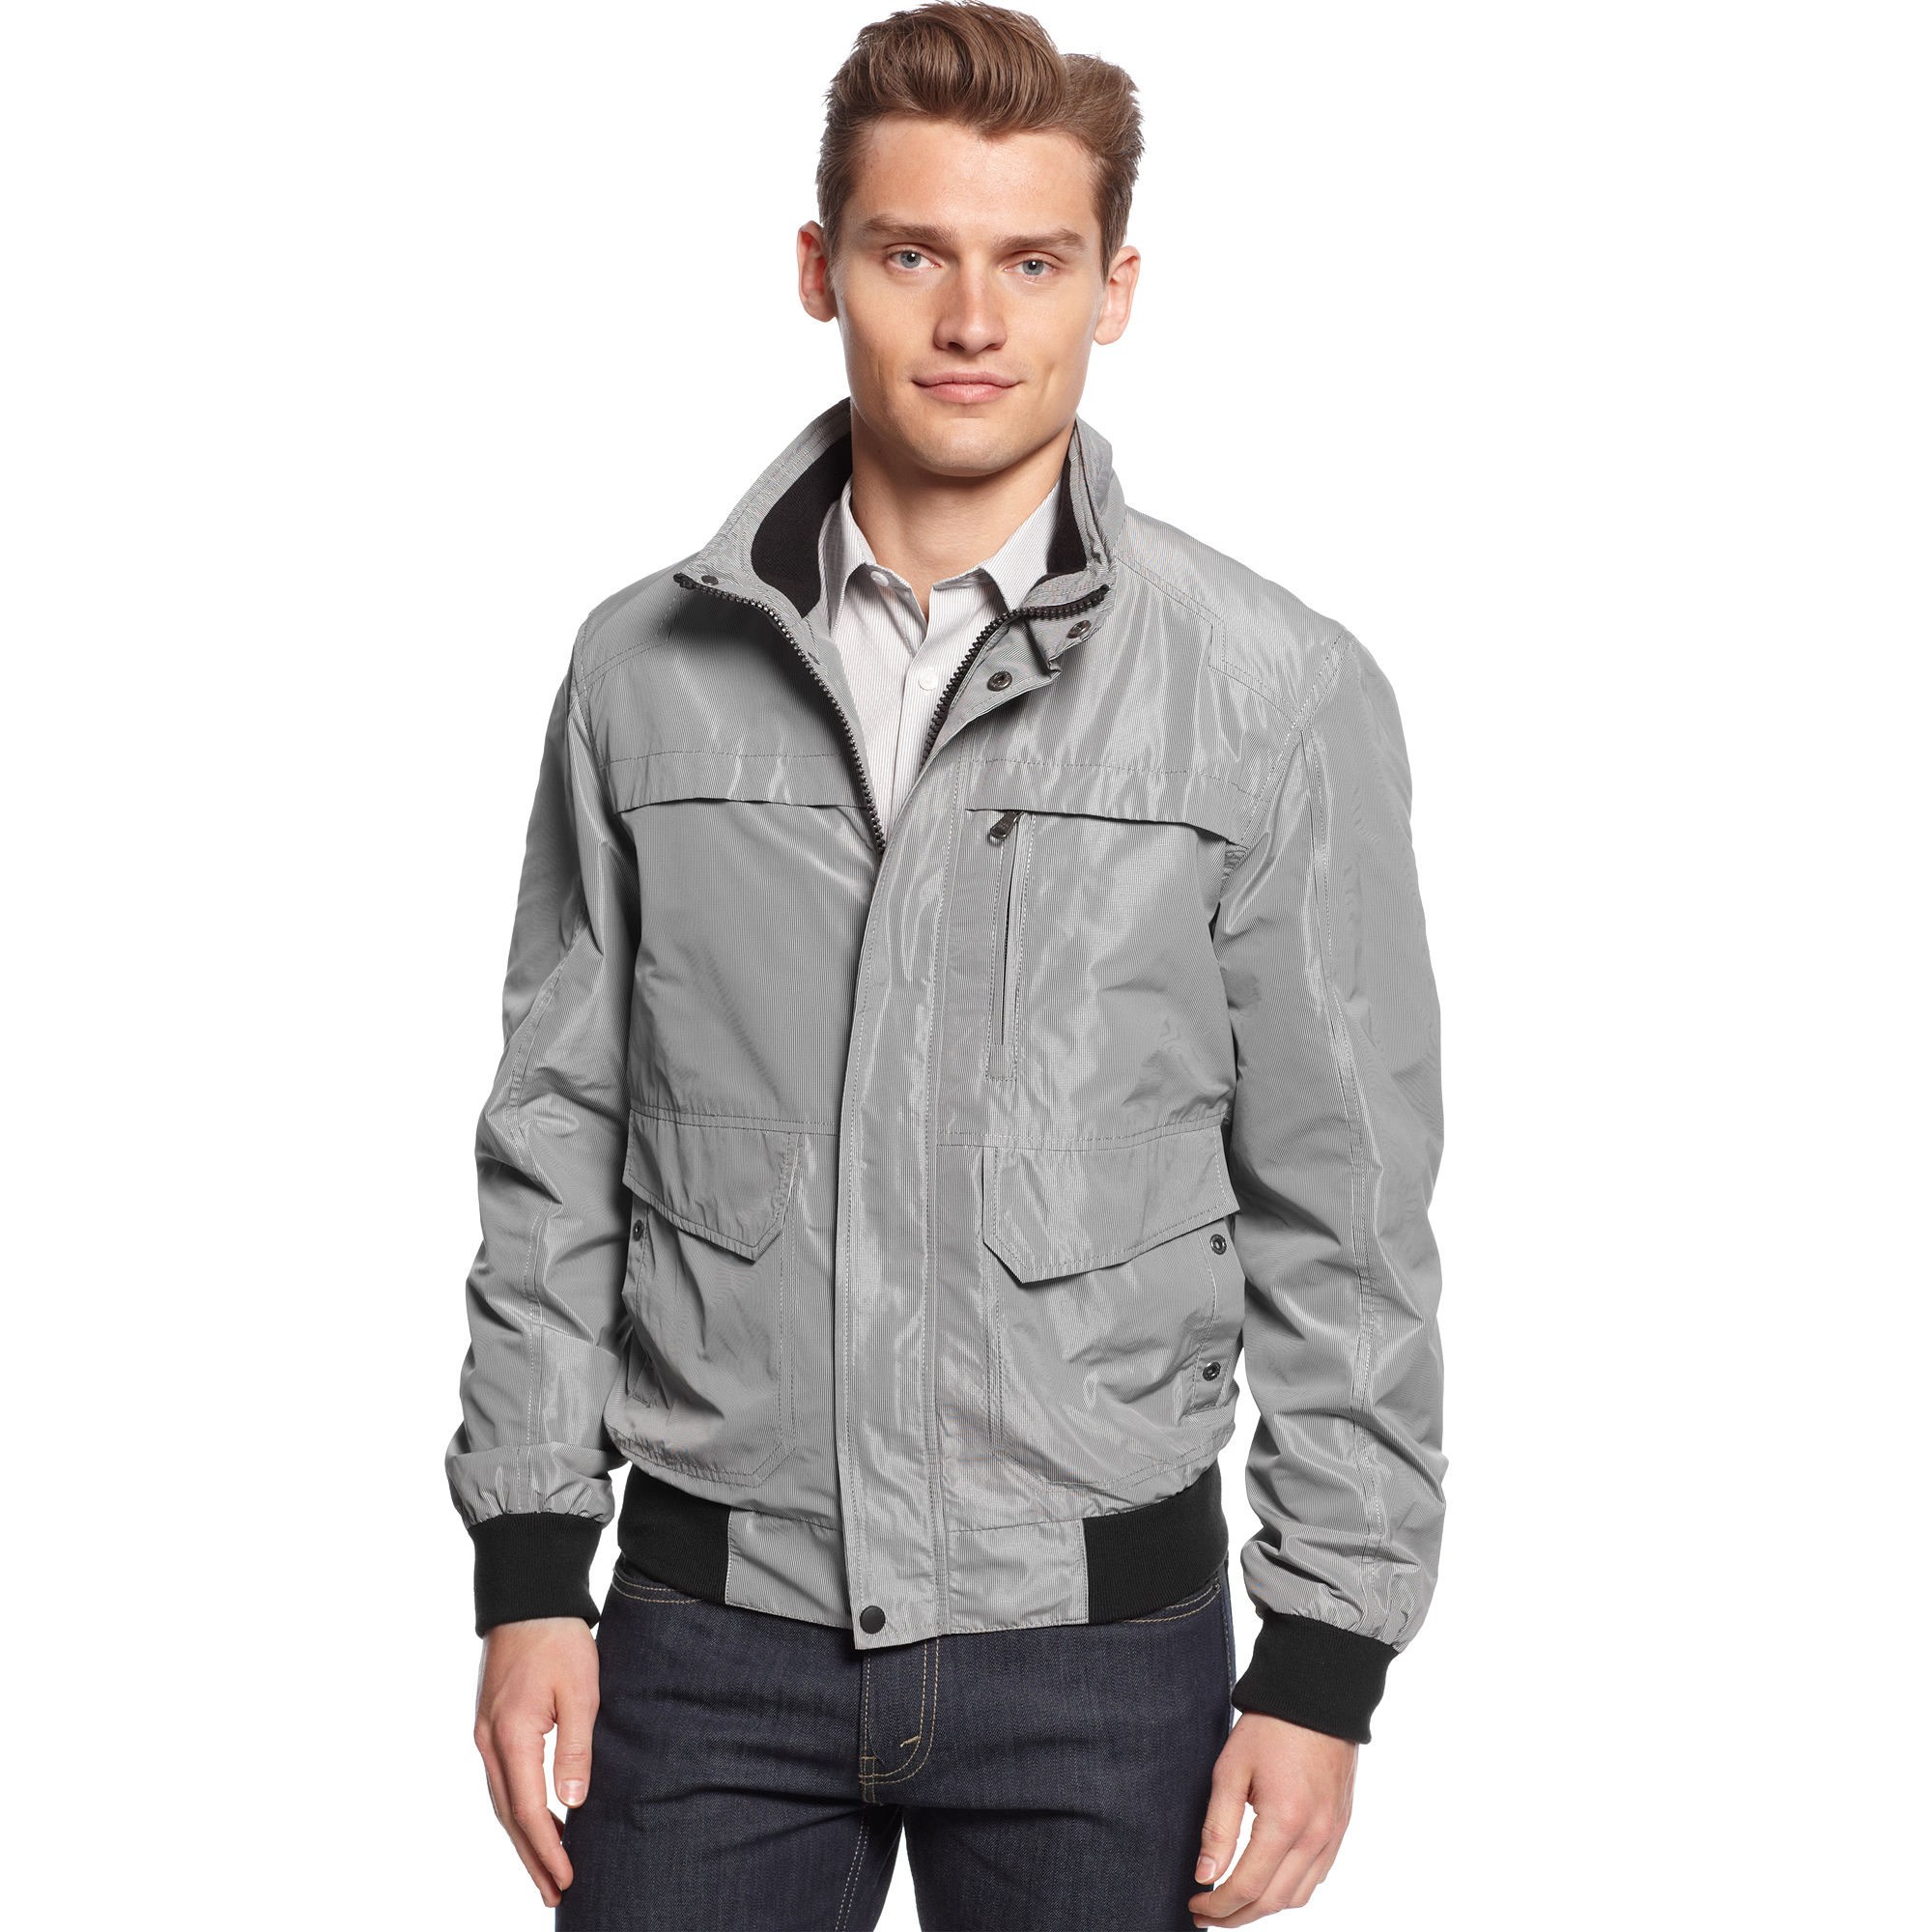 Calvin Klein Micro Check Bomber Jacket in Gray for Men - Lyst